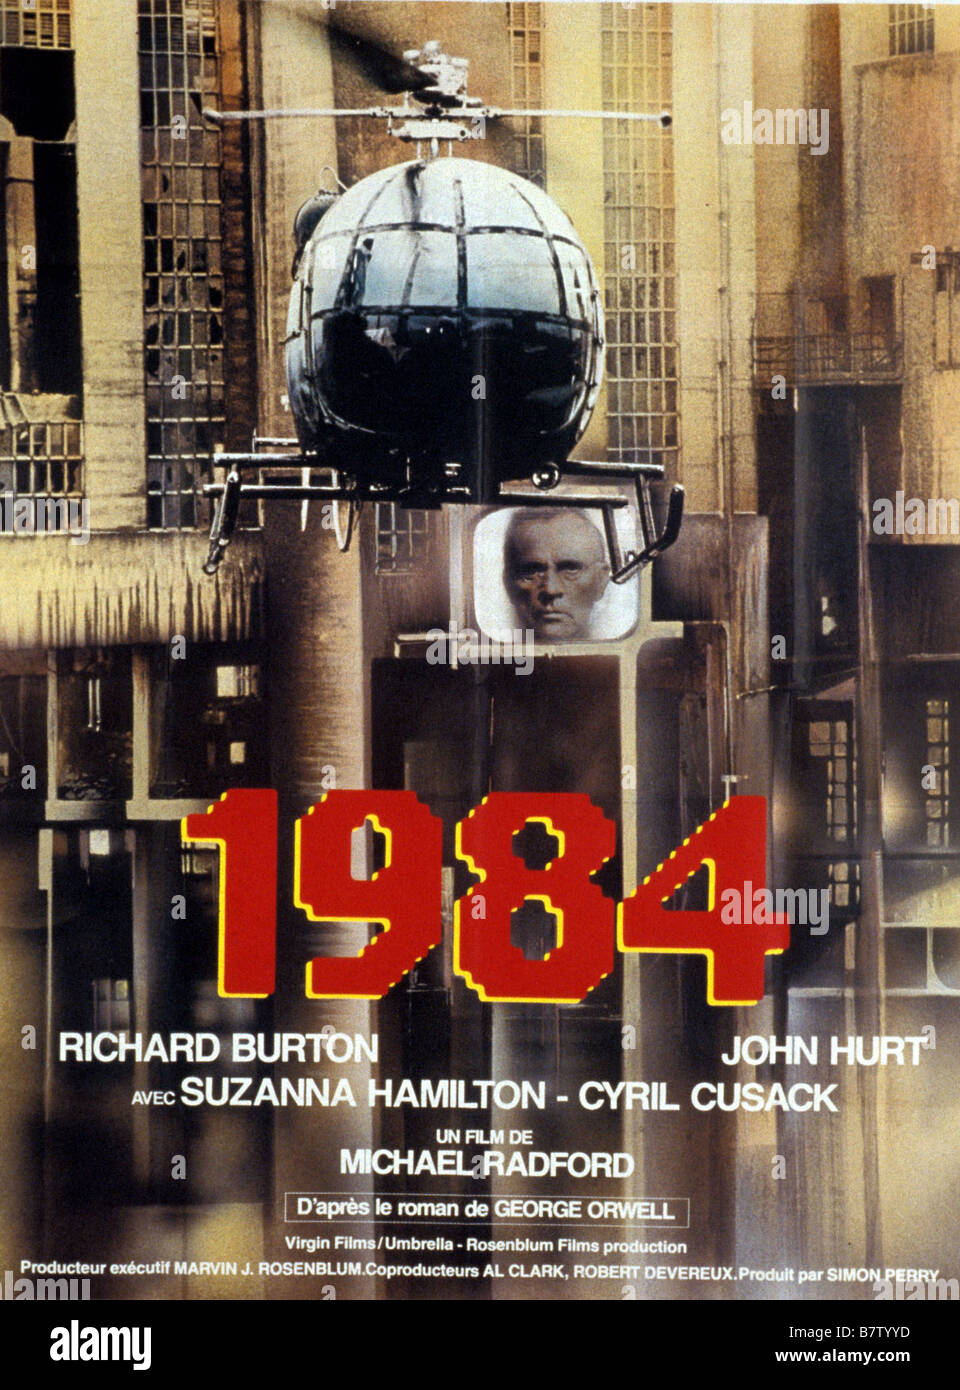 1984 john hurt richard burton movie poster